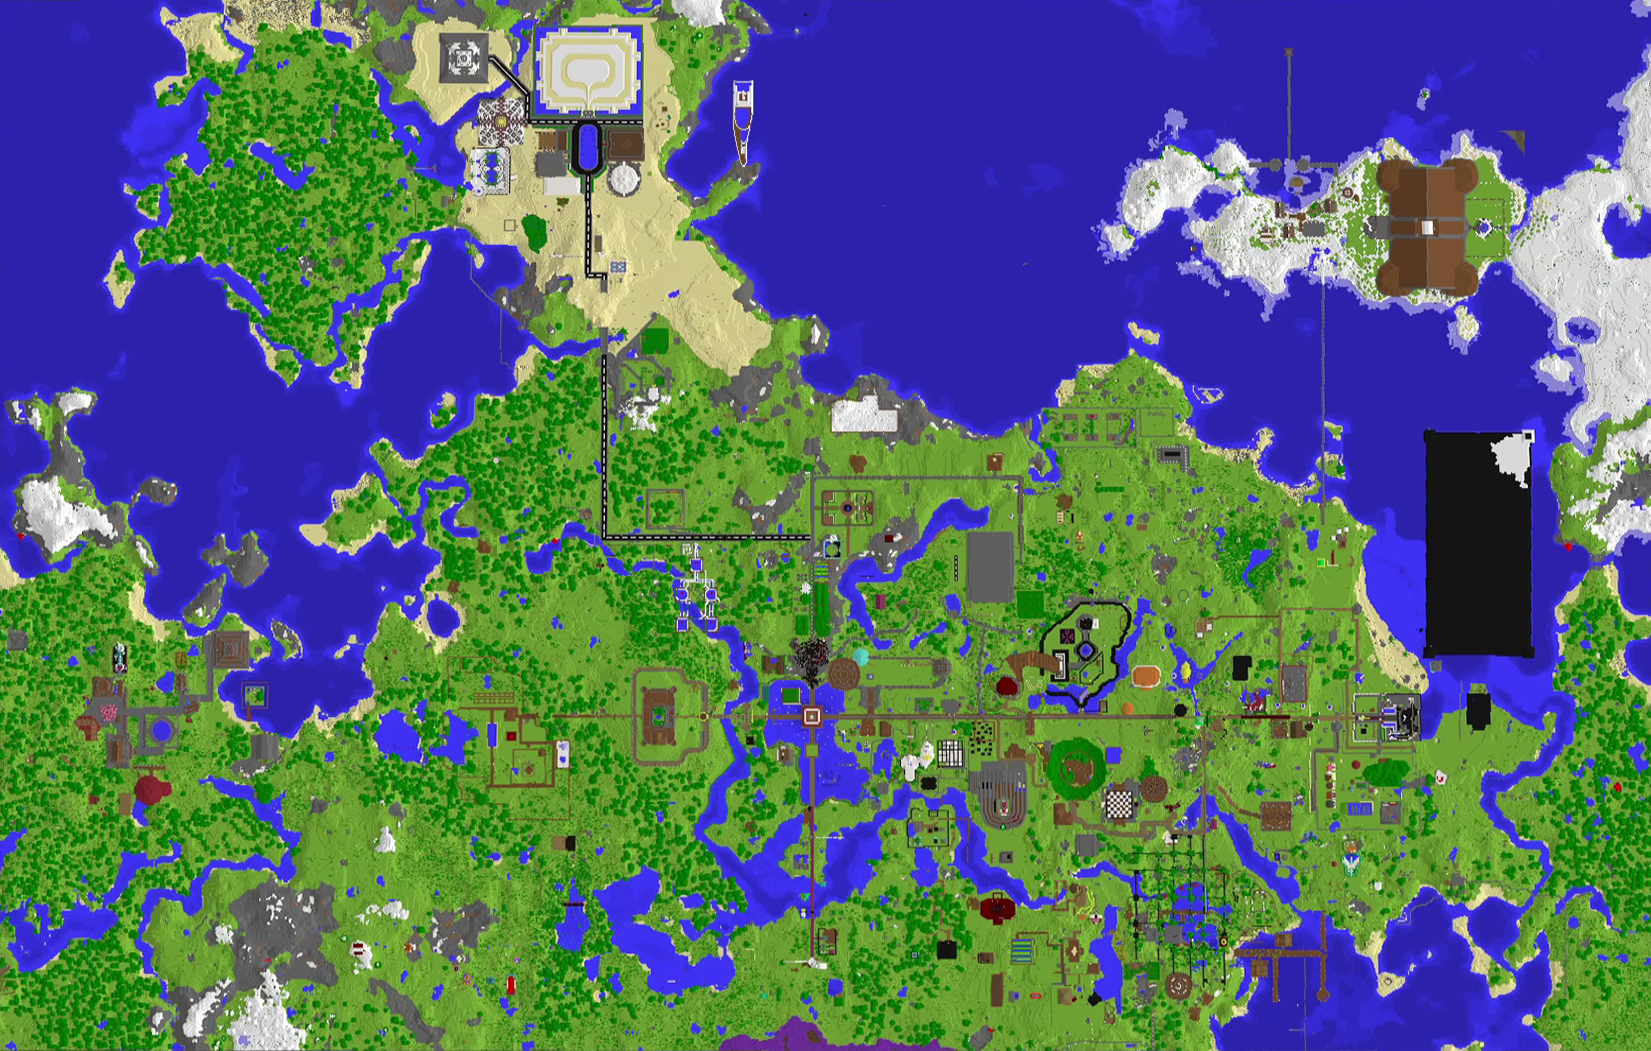 Technoblade's House Minecraft Map